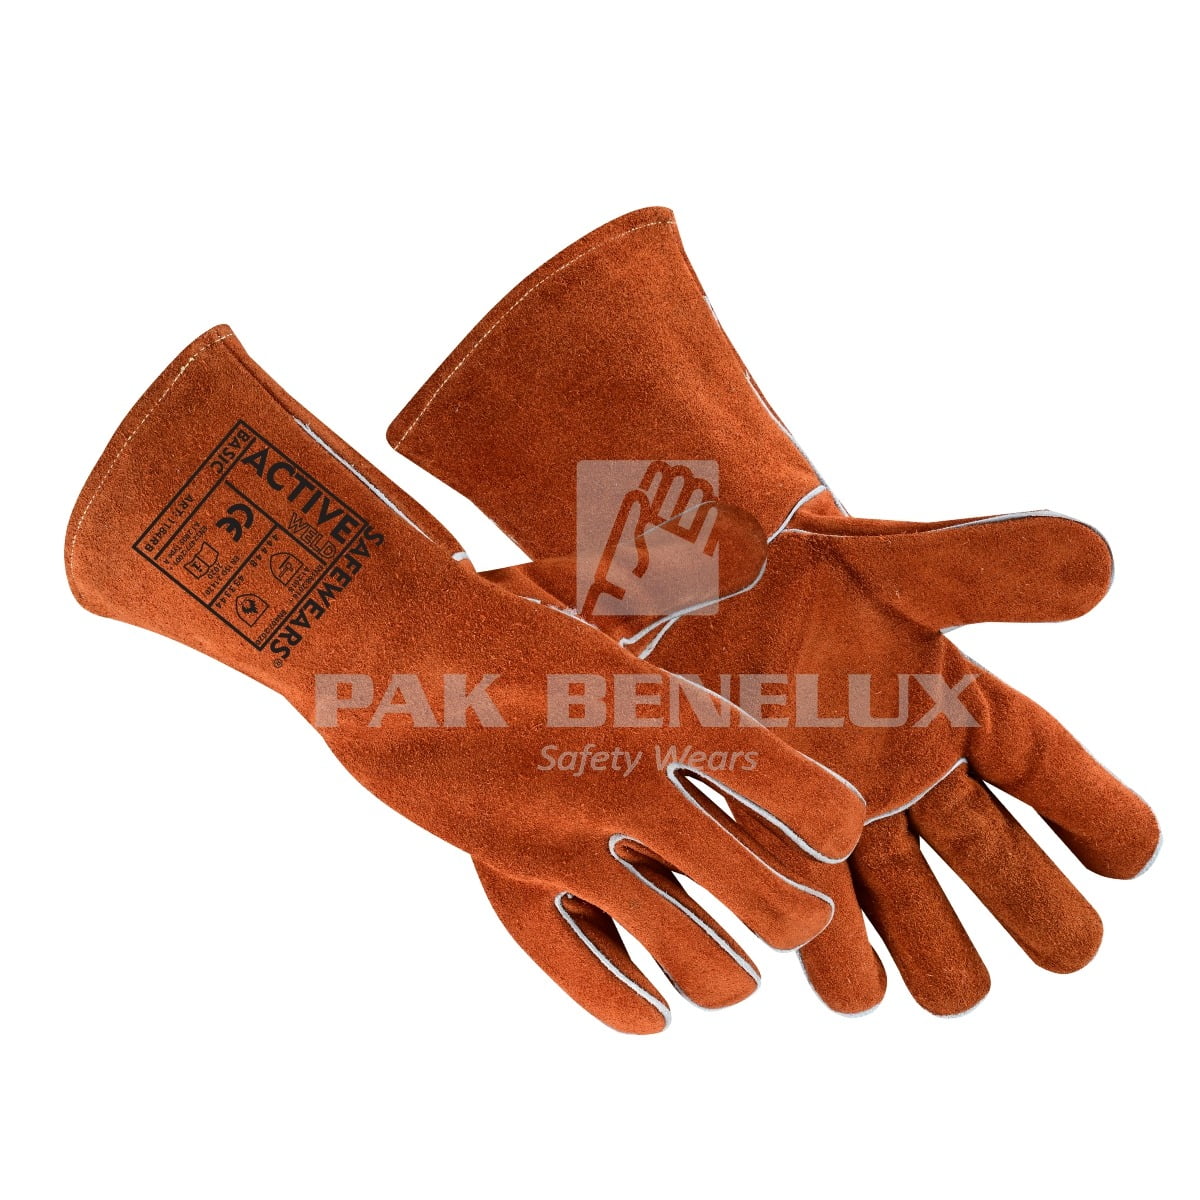 Welding Gloves Pro - Pak Benelux